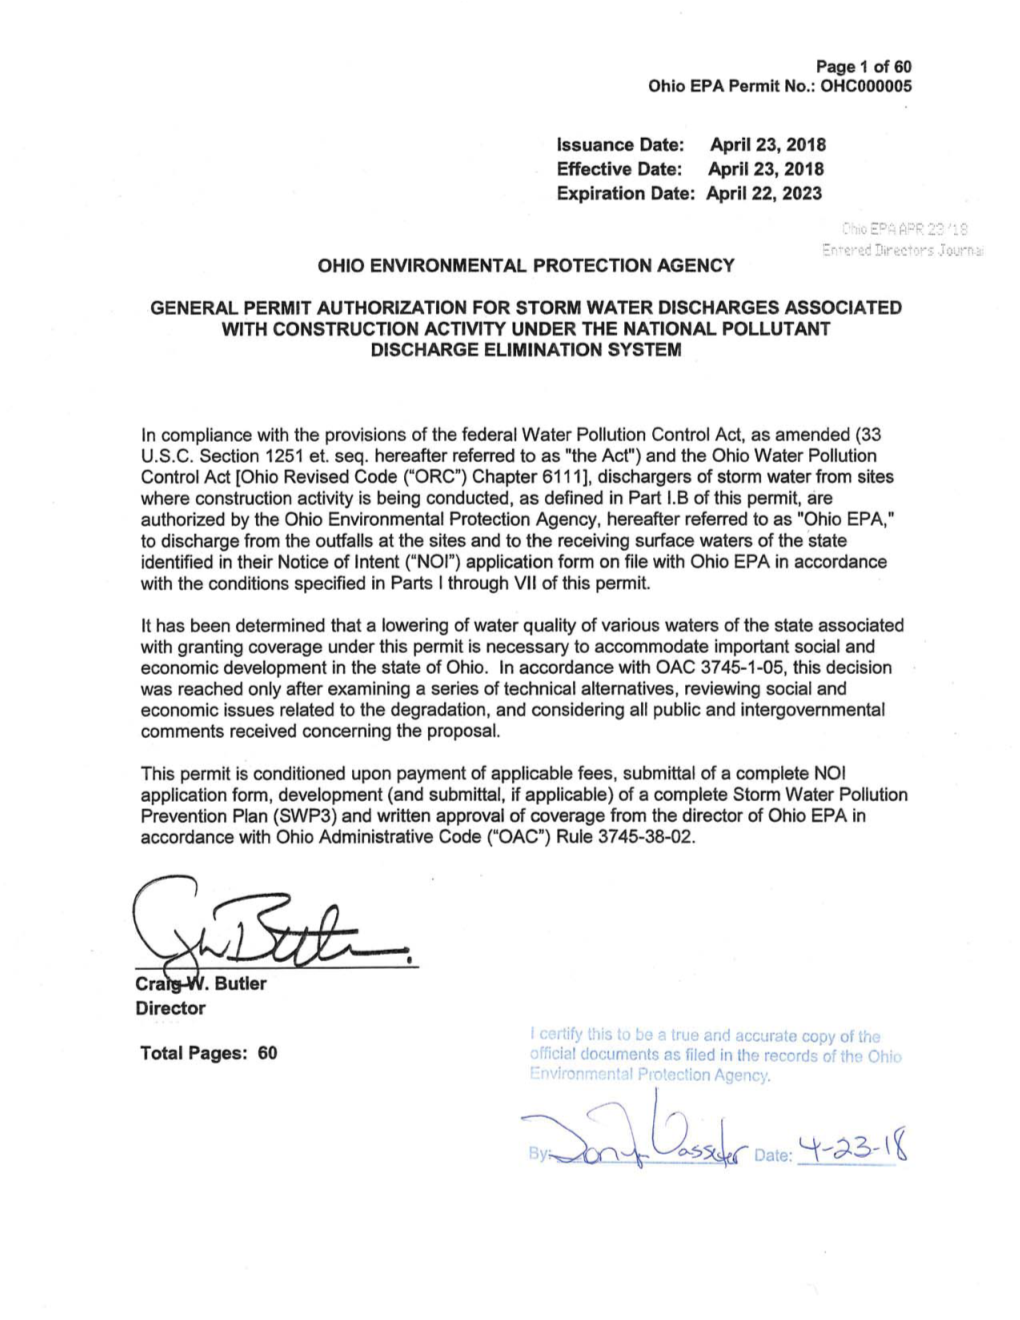 Page 2 of 60 Ohio EPA Permit No.: OHC000005